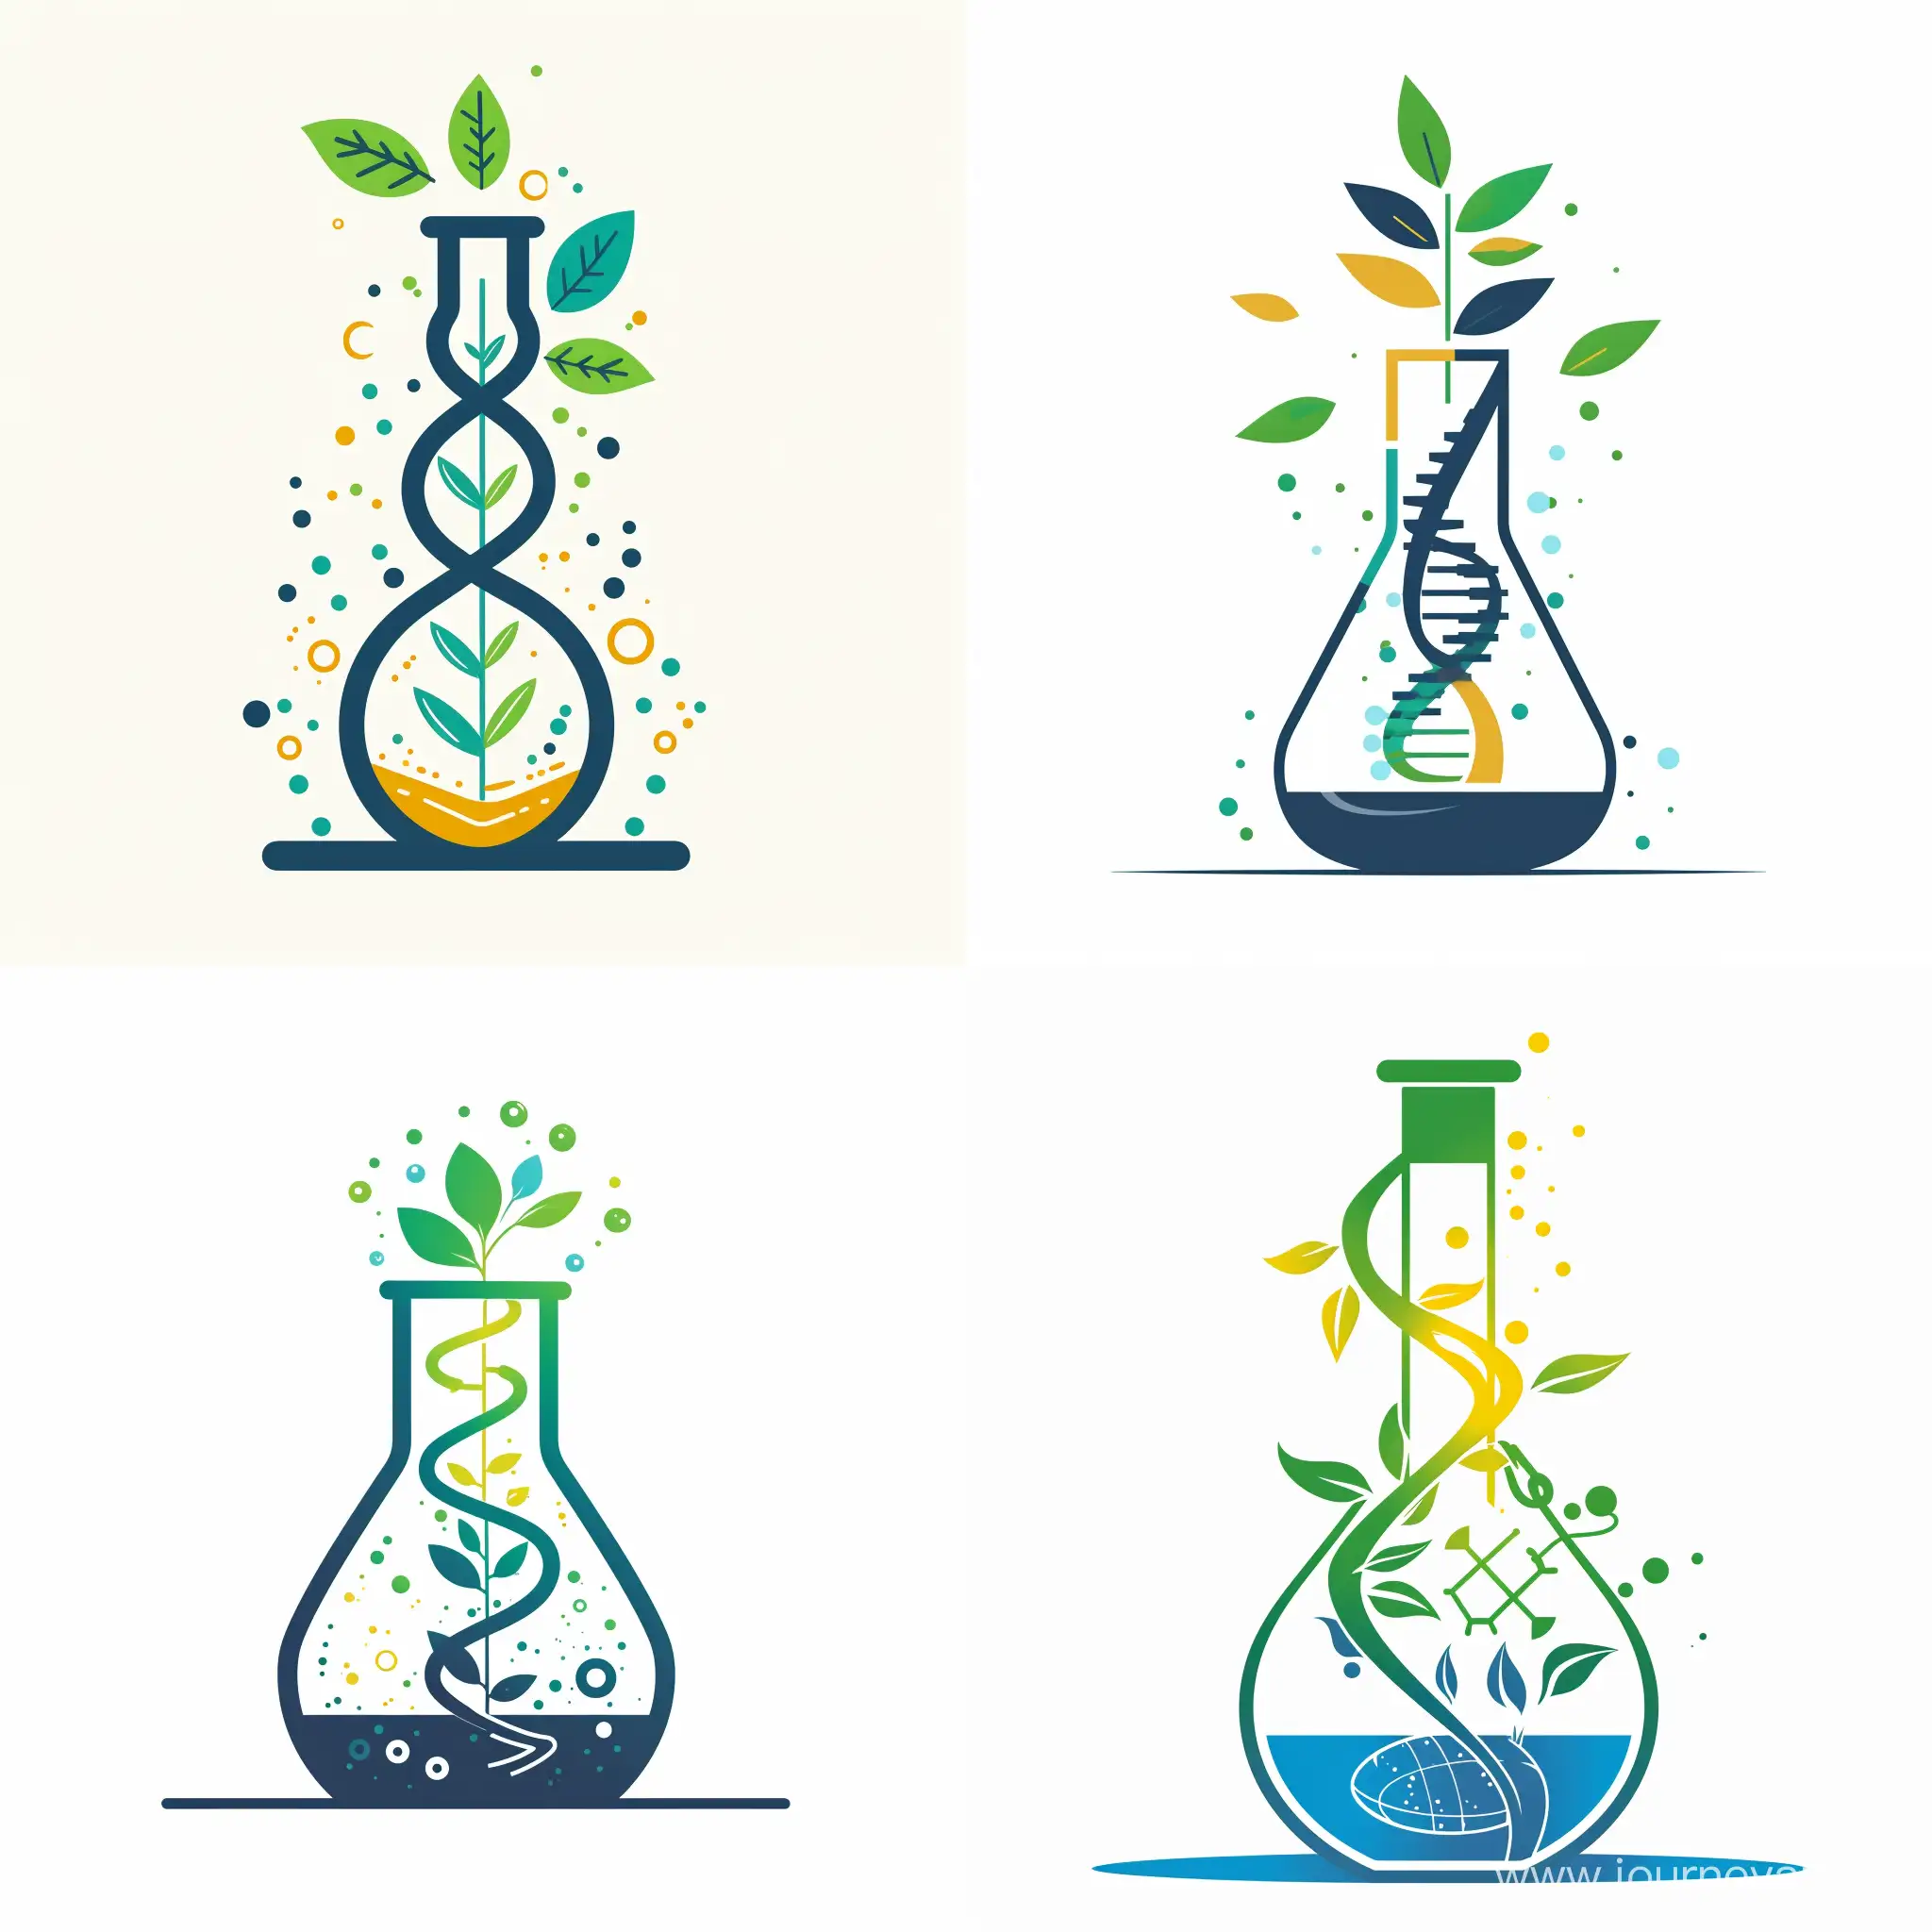 Biotech-Growth-Stylized-DNA-Plant-in-Glass-Beaker